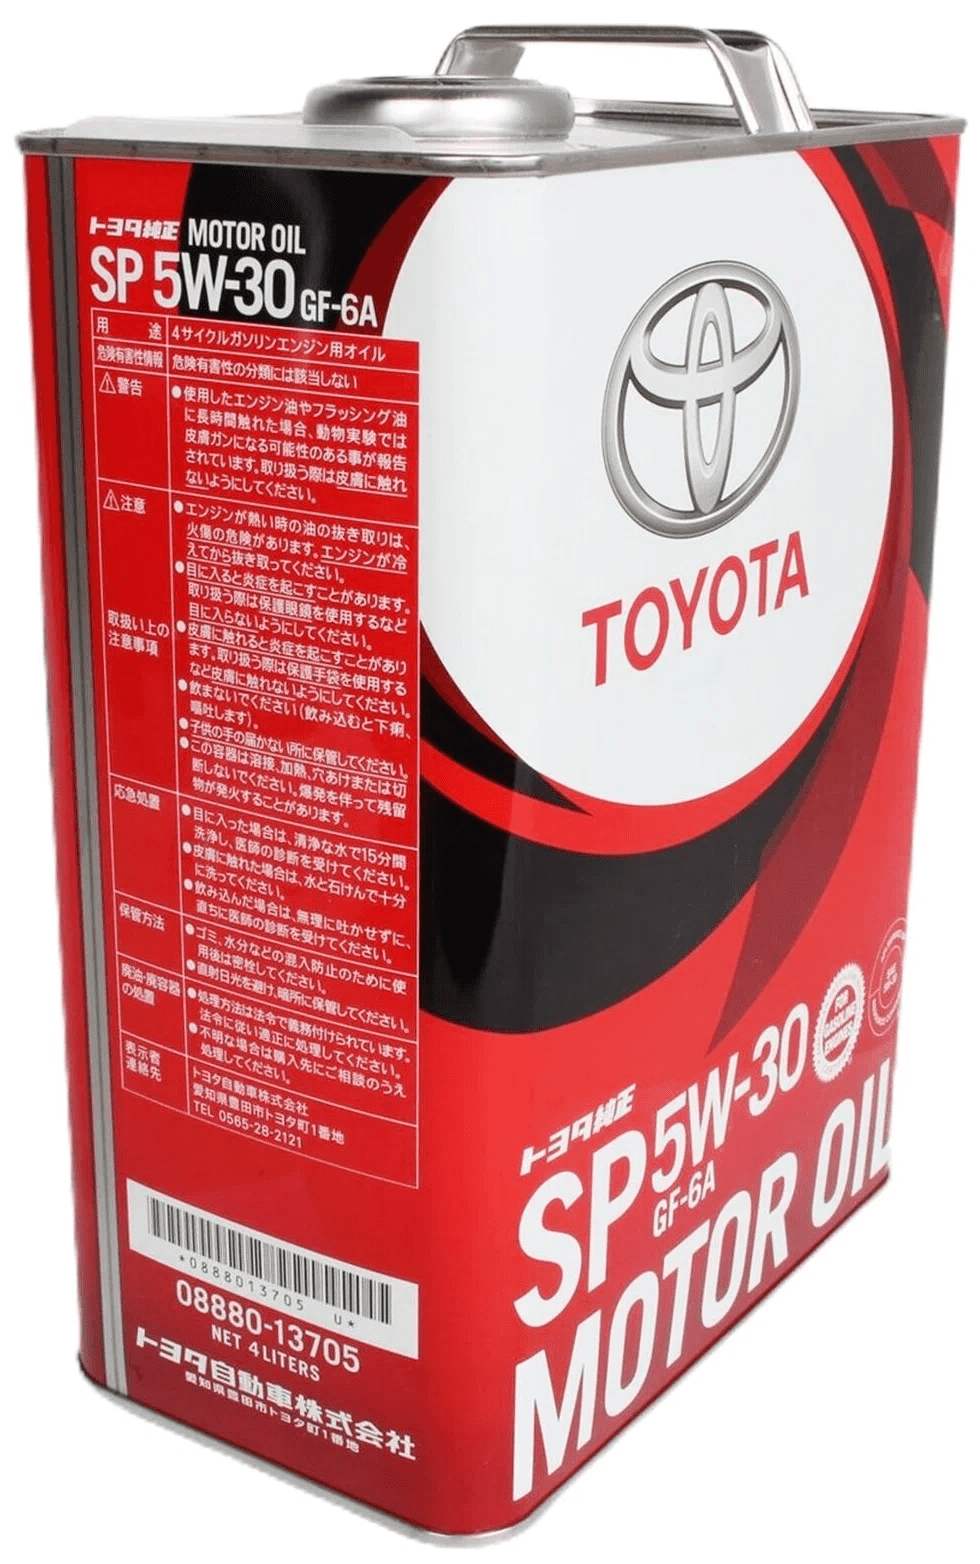 5w-30 Motor Oil API SP, ilsac gf-6a, 4л (синт. мотор. масло) - Toyota 08880-13705